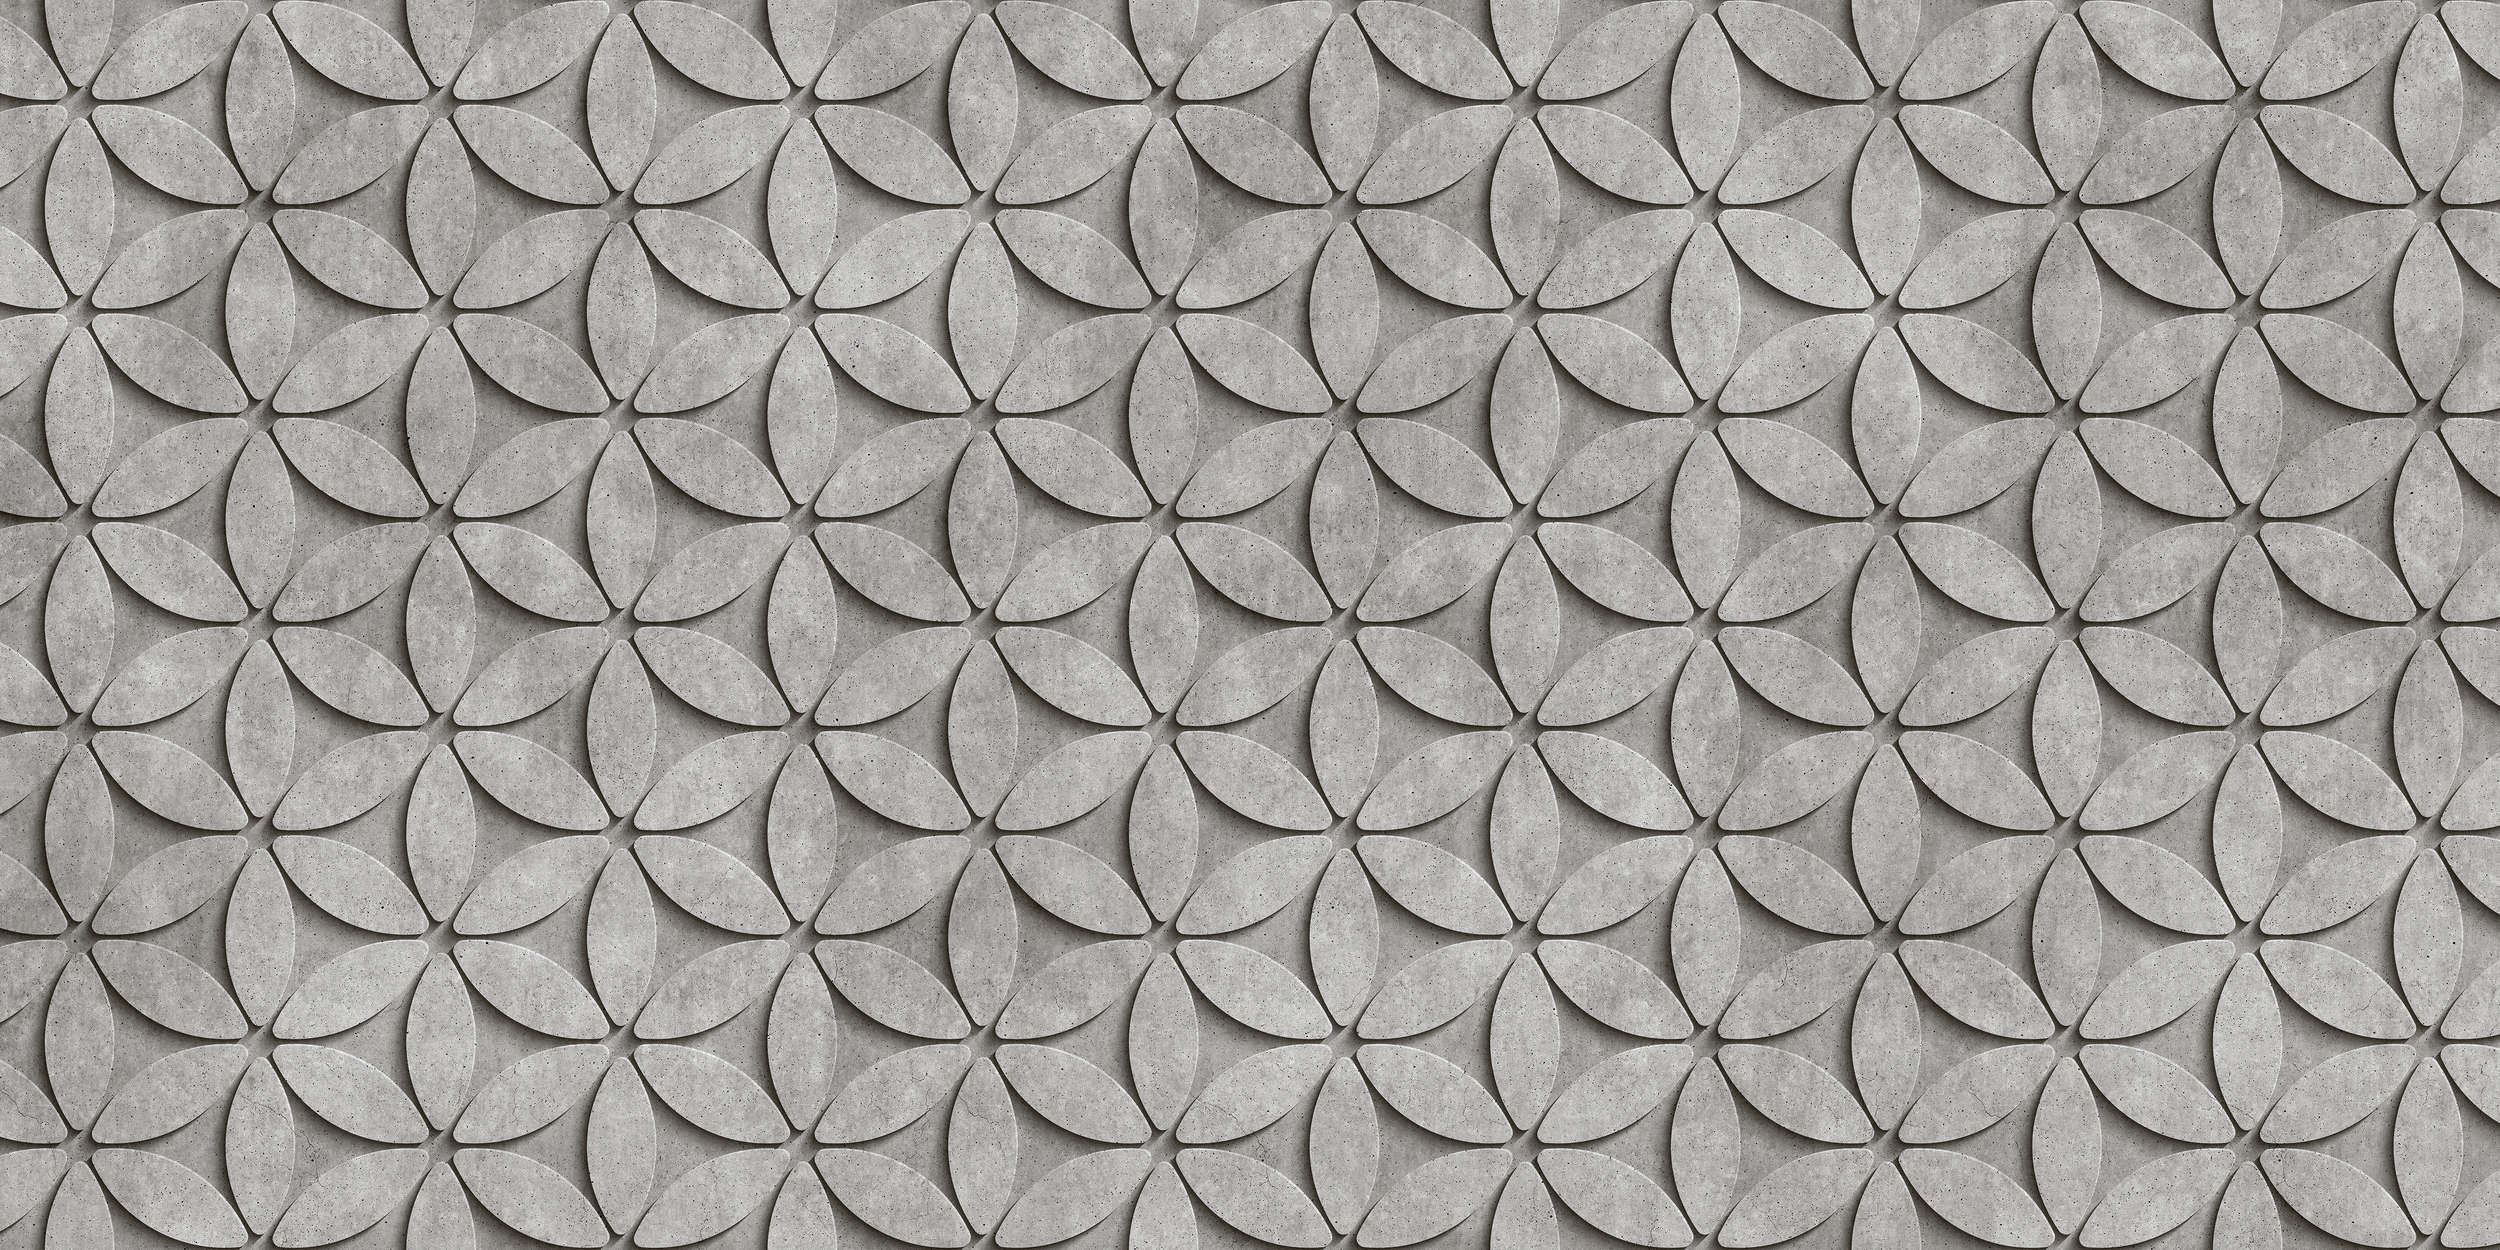             Tile 1 - Carta da parati Cool 3D Concrete Polygons - Grigio, nero | Panno liscio opaco
        